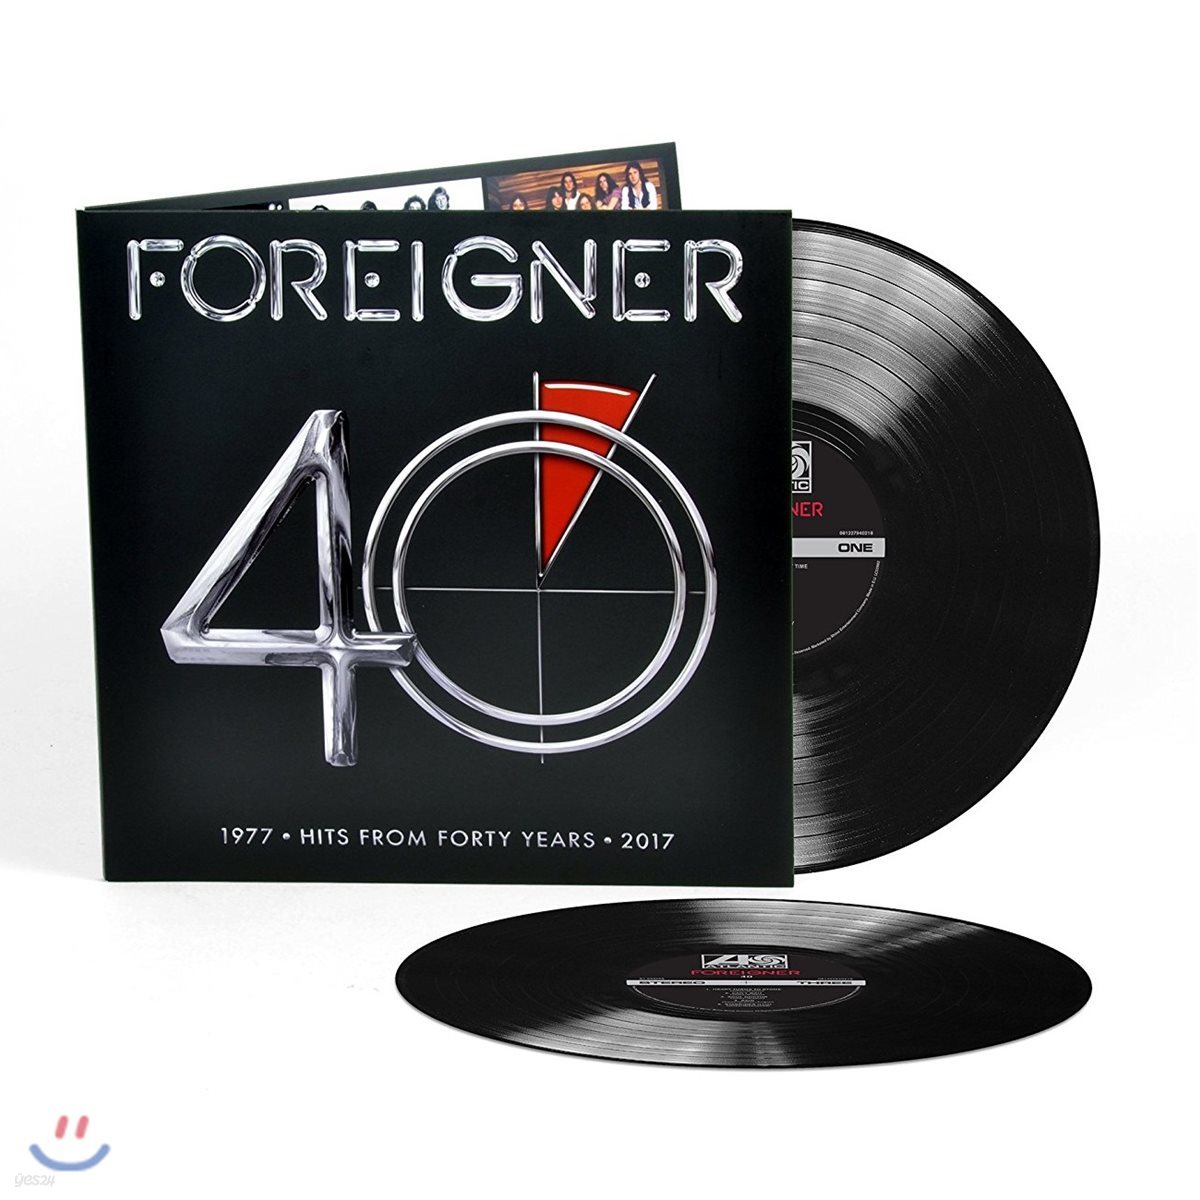 Foreigner (포리너) - 베스트 앨범 40 [2LP]